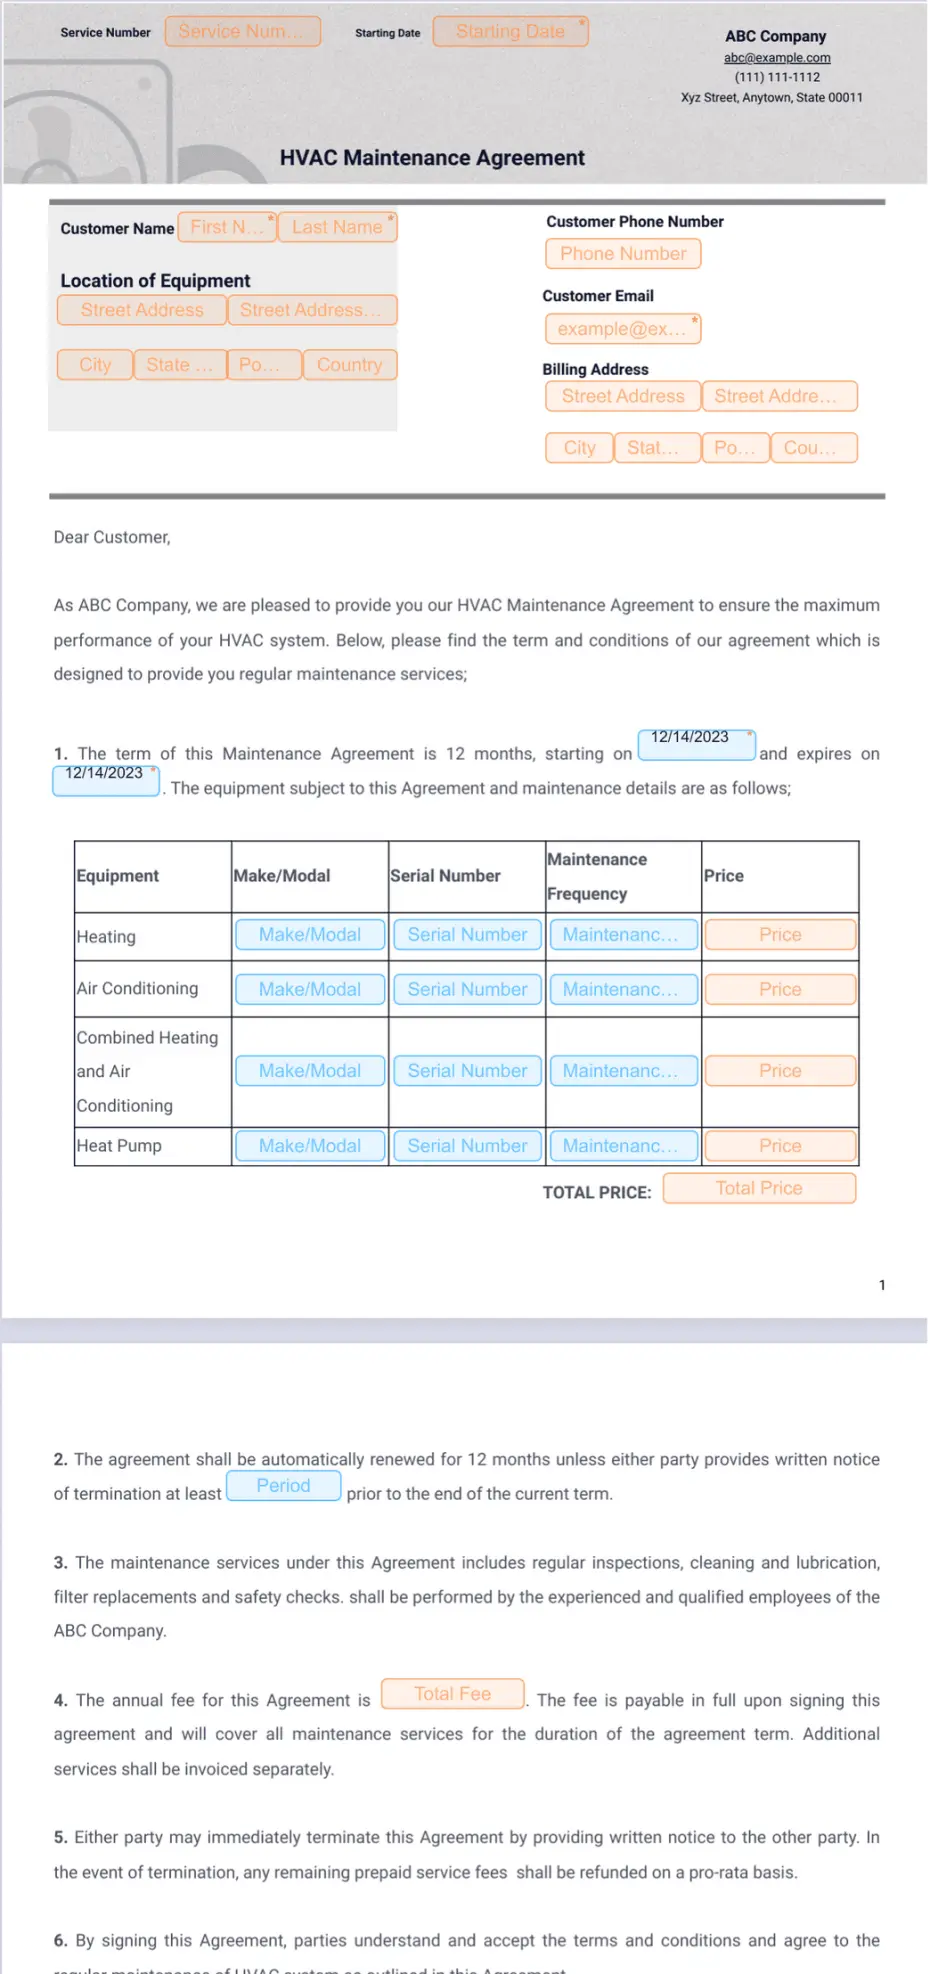 HVAC Maintenance Agreement